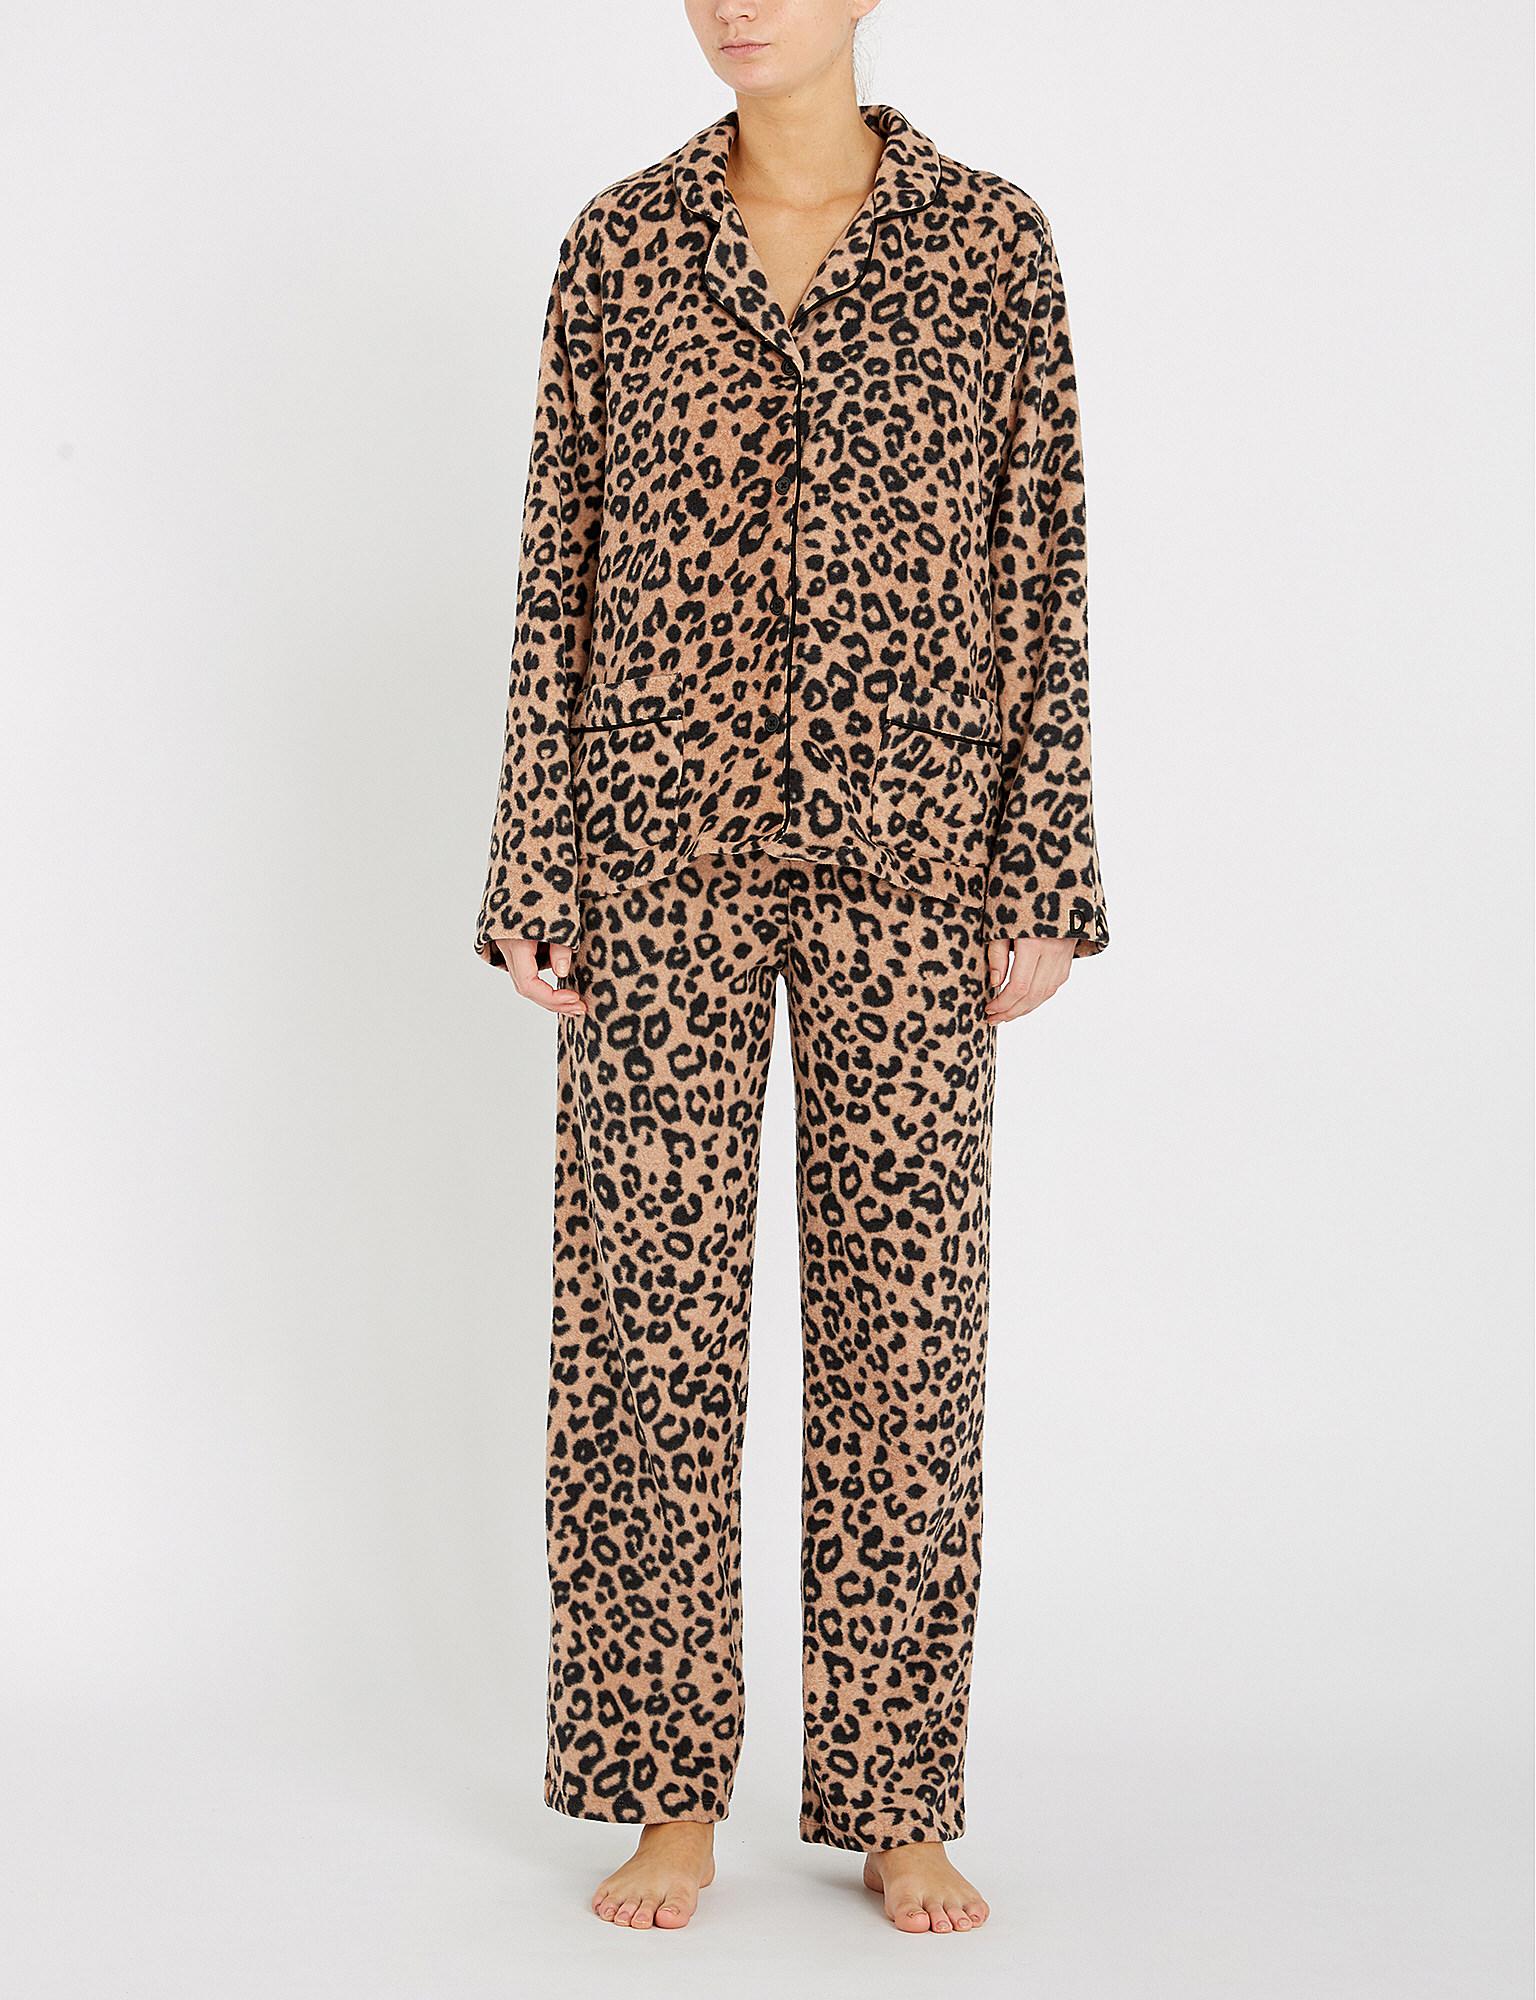 Nieuwsgierigheid blad medley DKNY Leopard-print Fleece Pyjama Set | Lyst